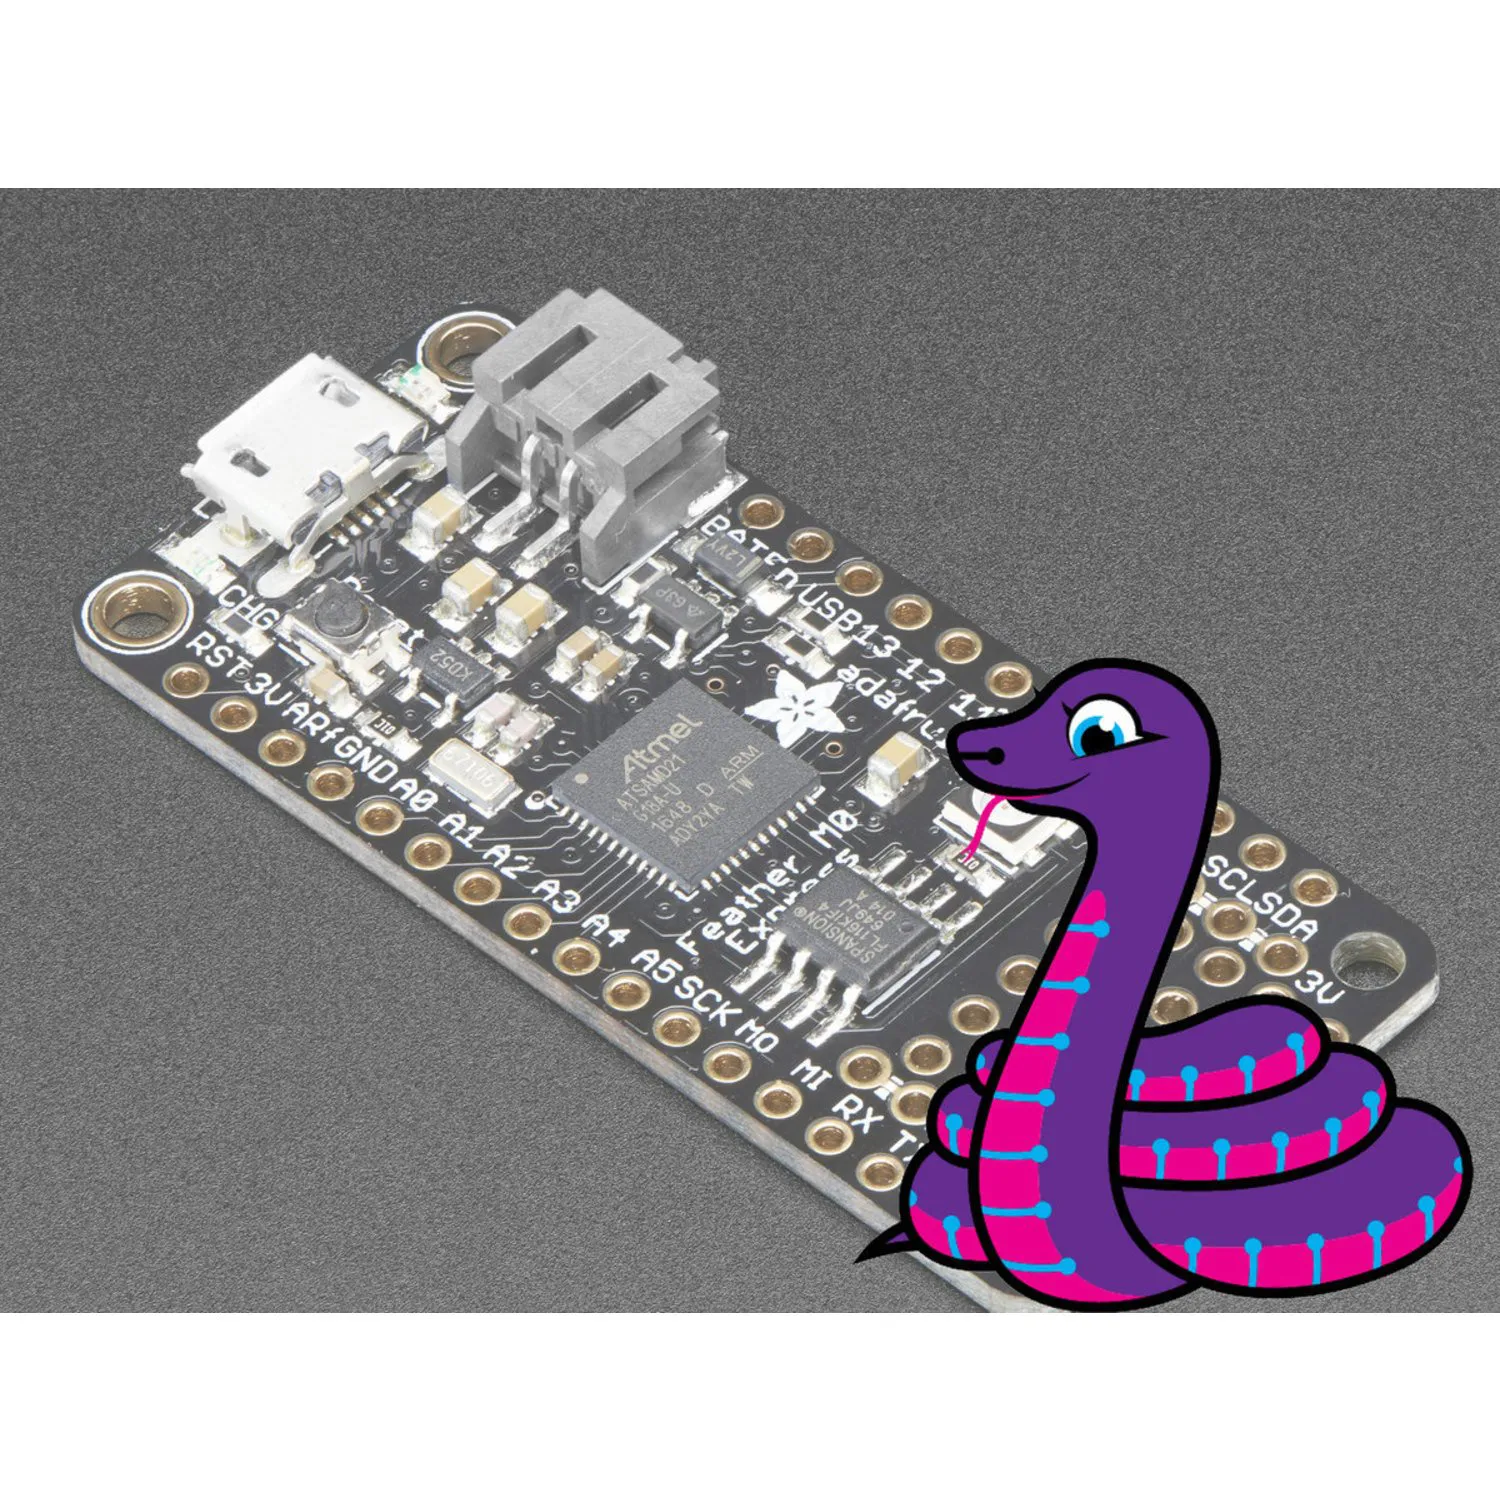 Photo of Adafruit Feather M0 Express - Designed for CircuitPython [ATSAMD21 Cortex M0]